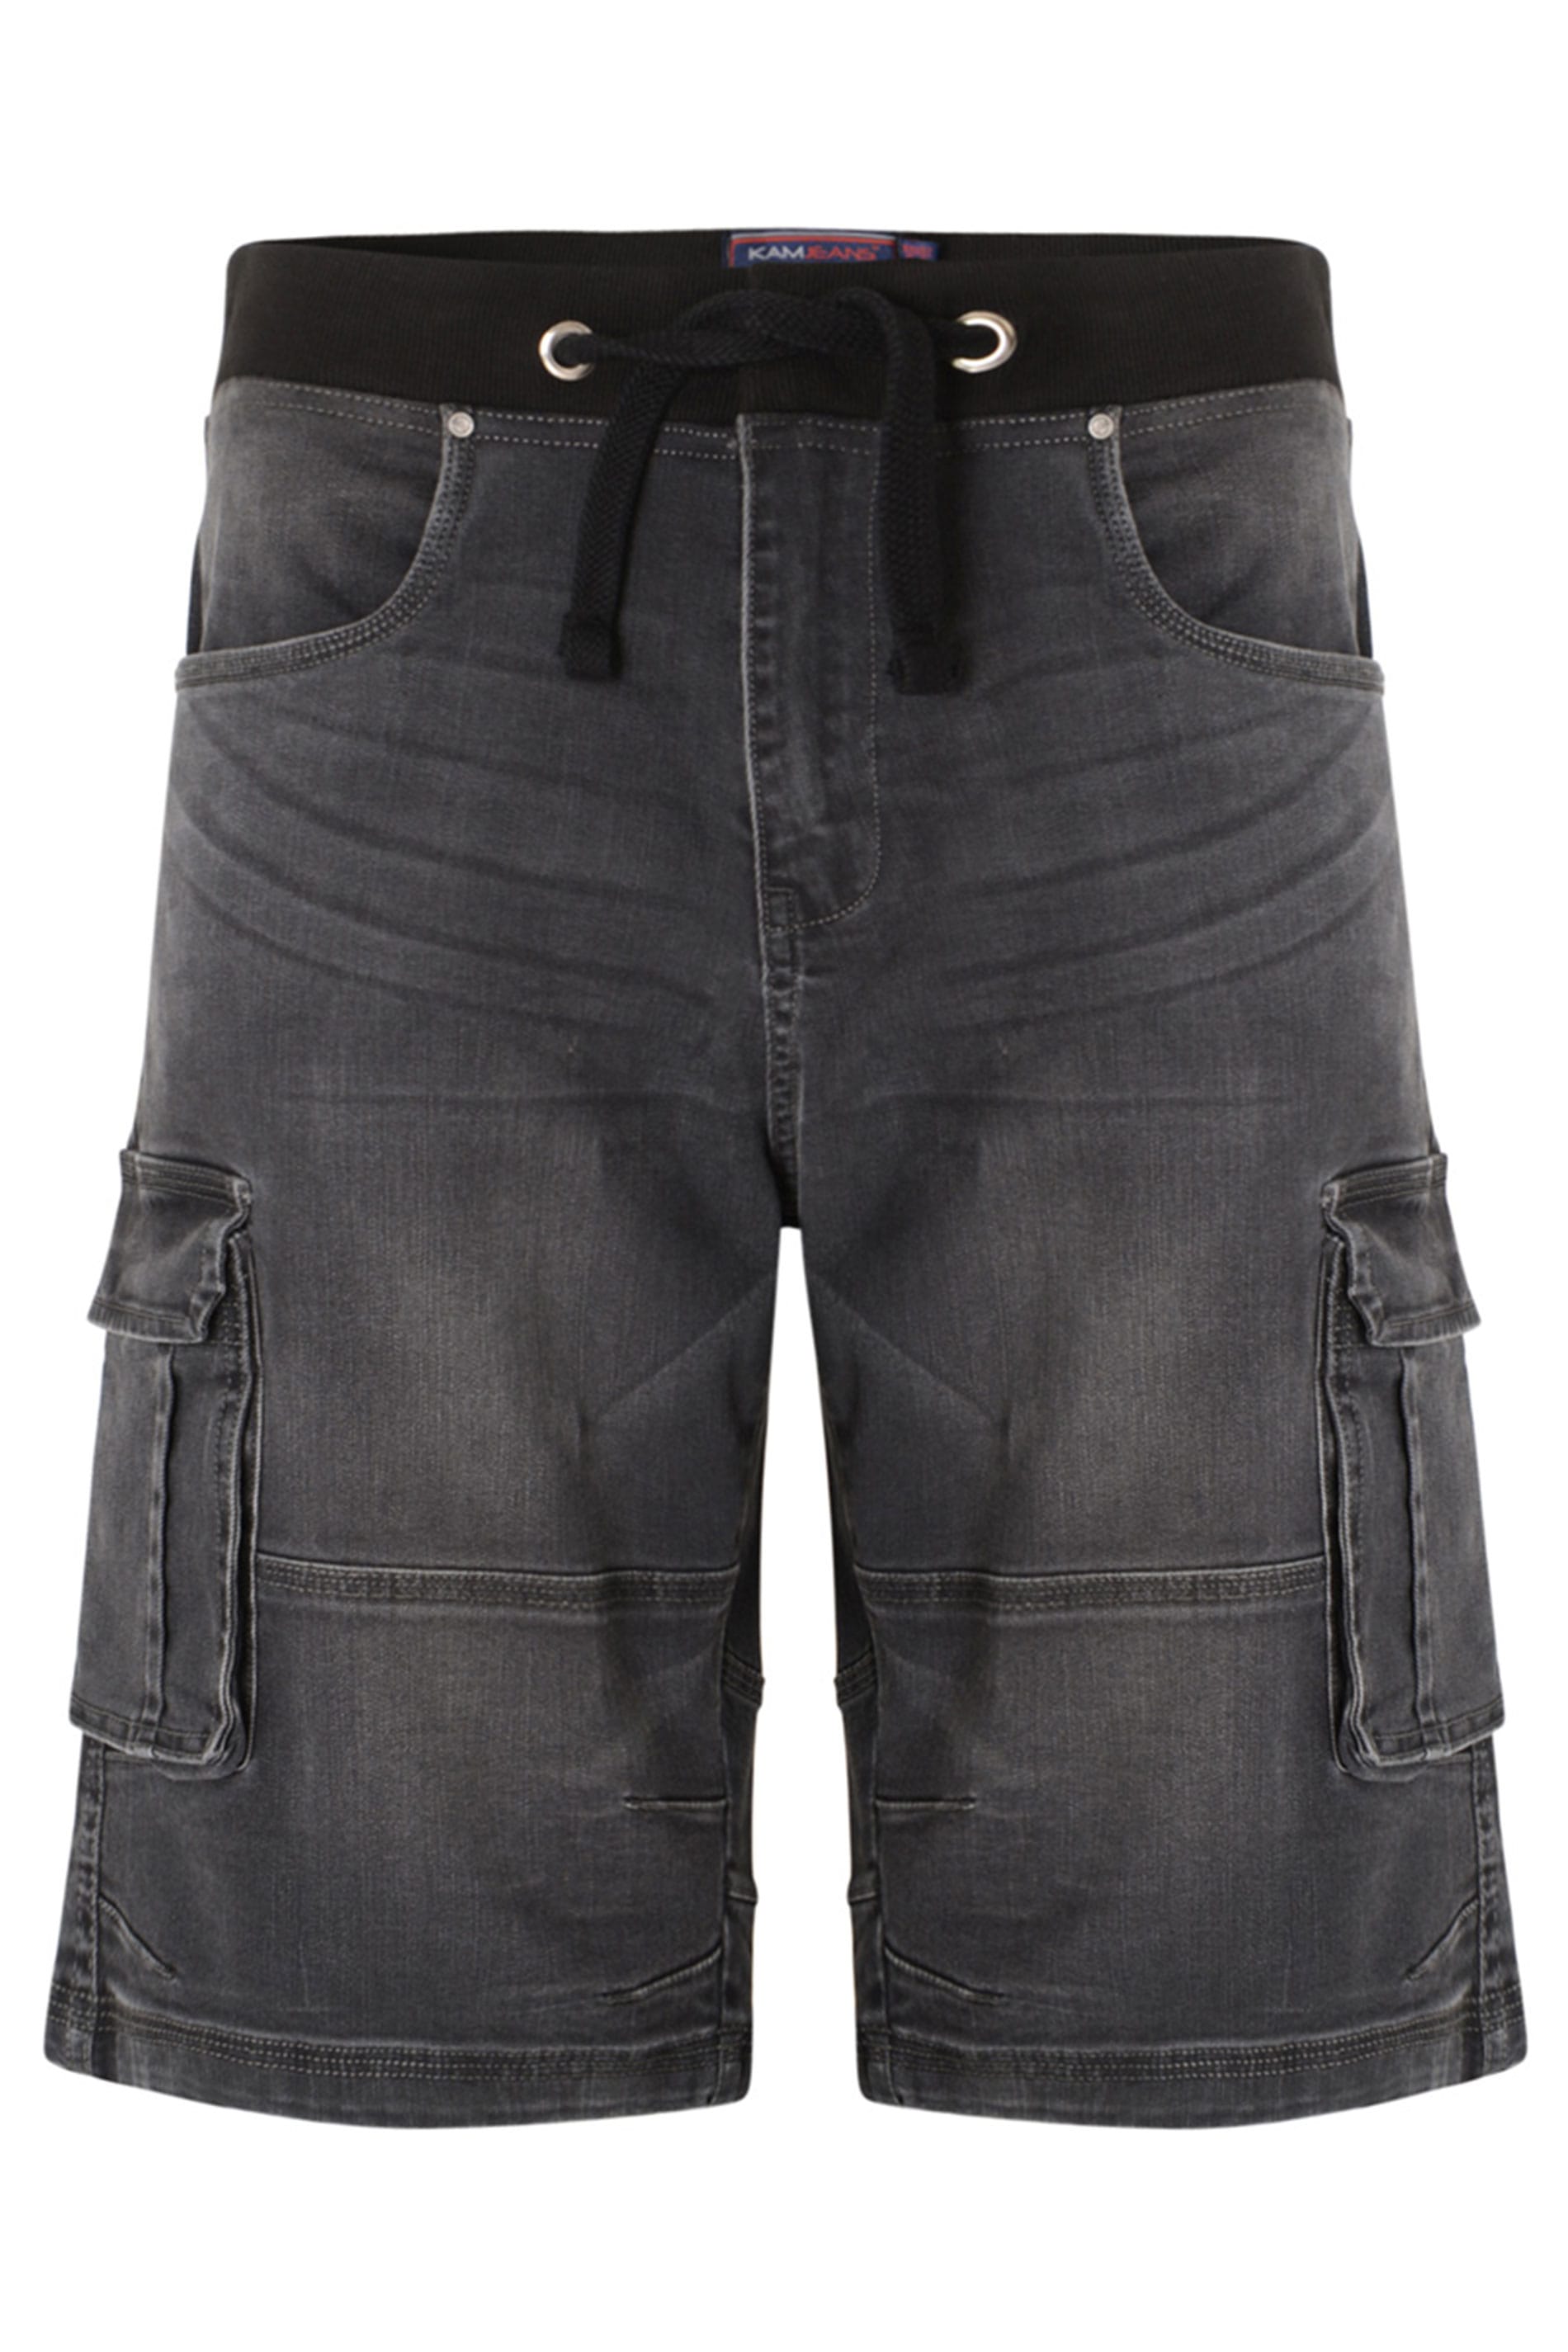 KAM Big & Tall Charcoal Grey Denim Shorts_f4e4.jpg